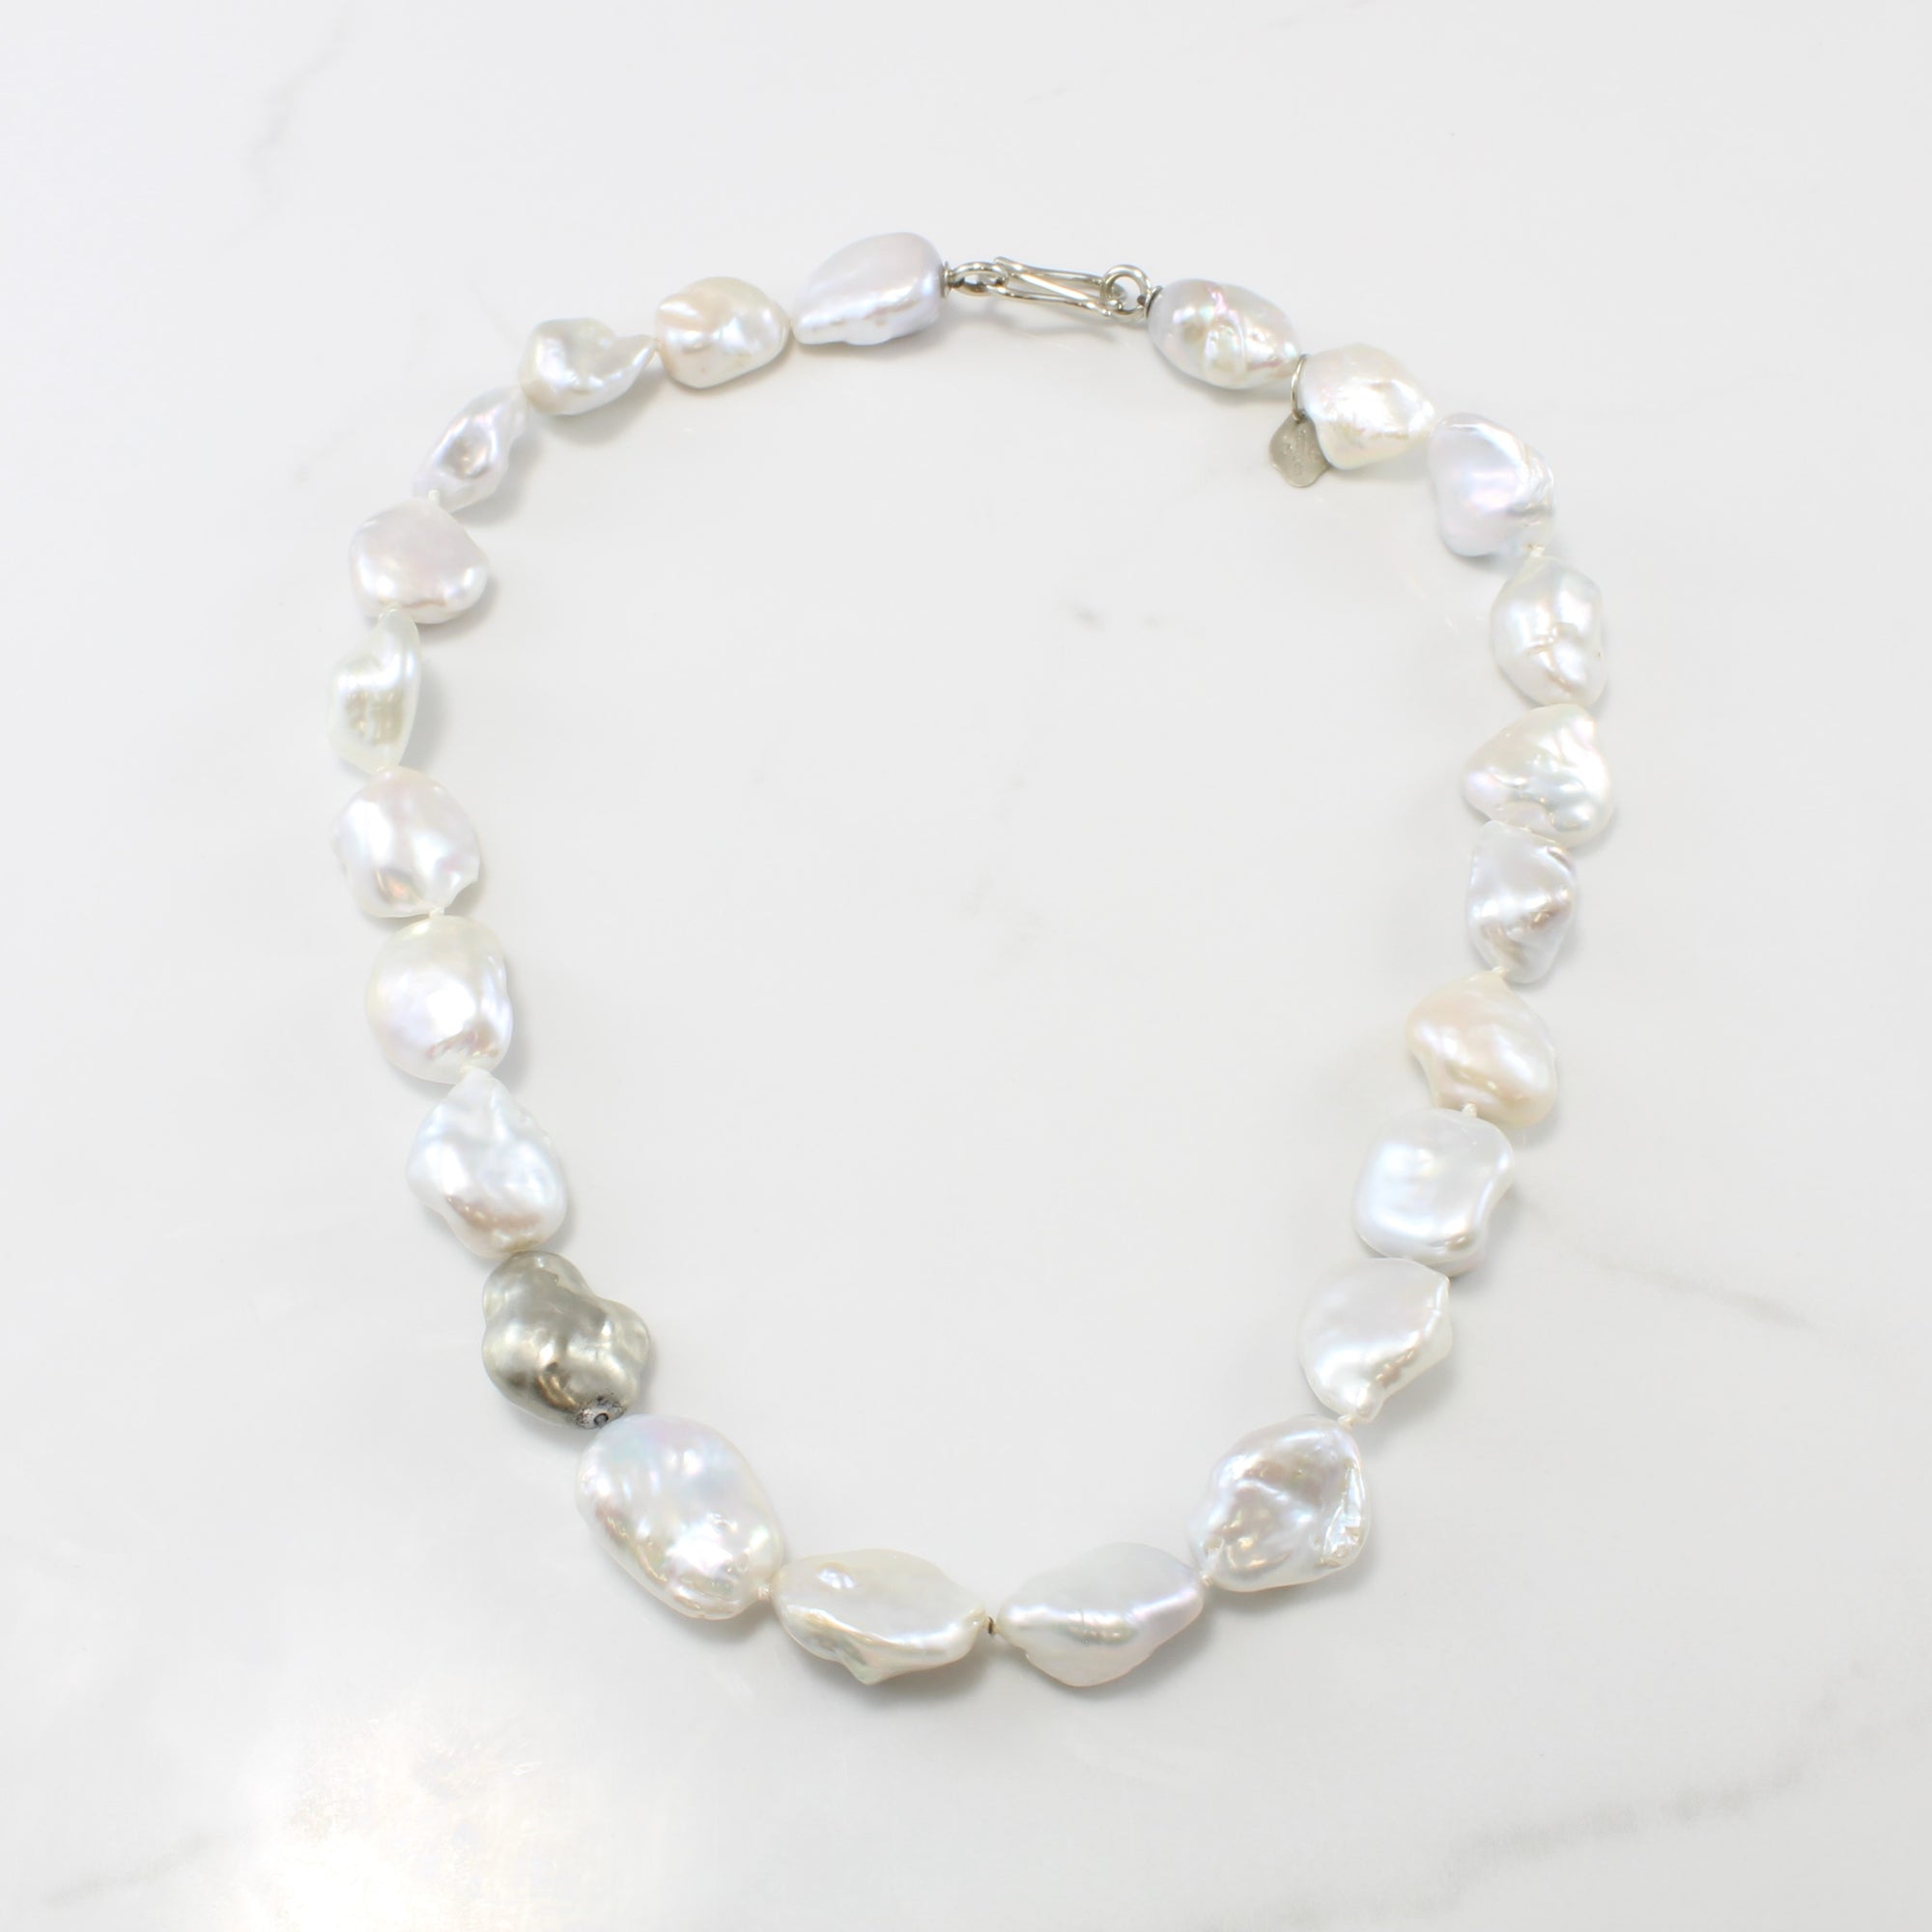 Stittgen' Baroque Pearl Necklace | 18